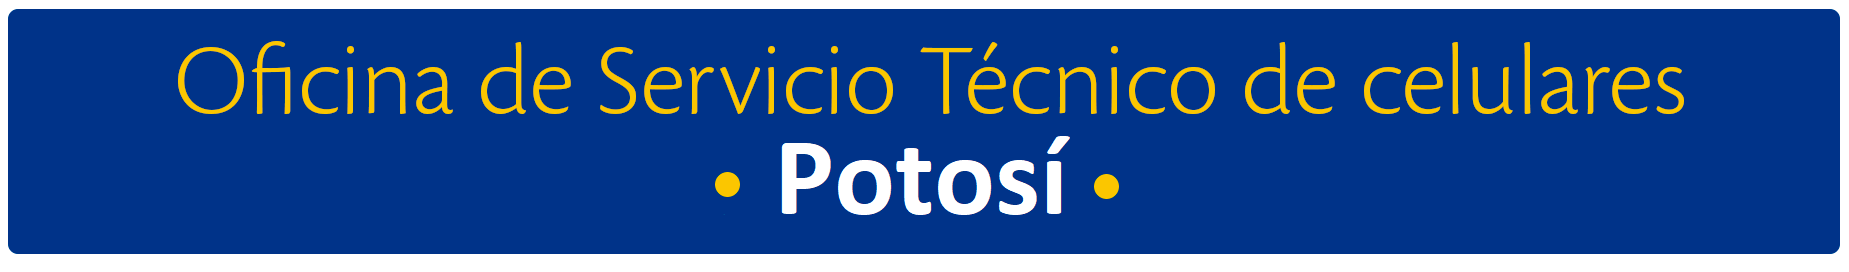 aw-titulo_Potosi_servicio_tecnico.png